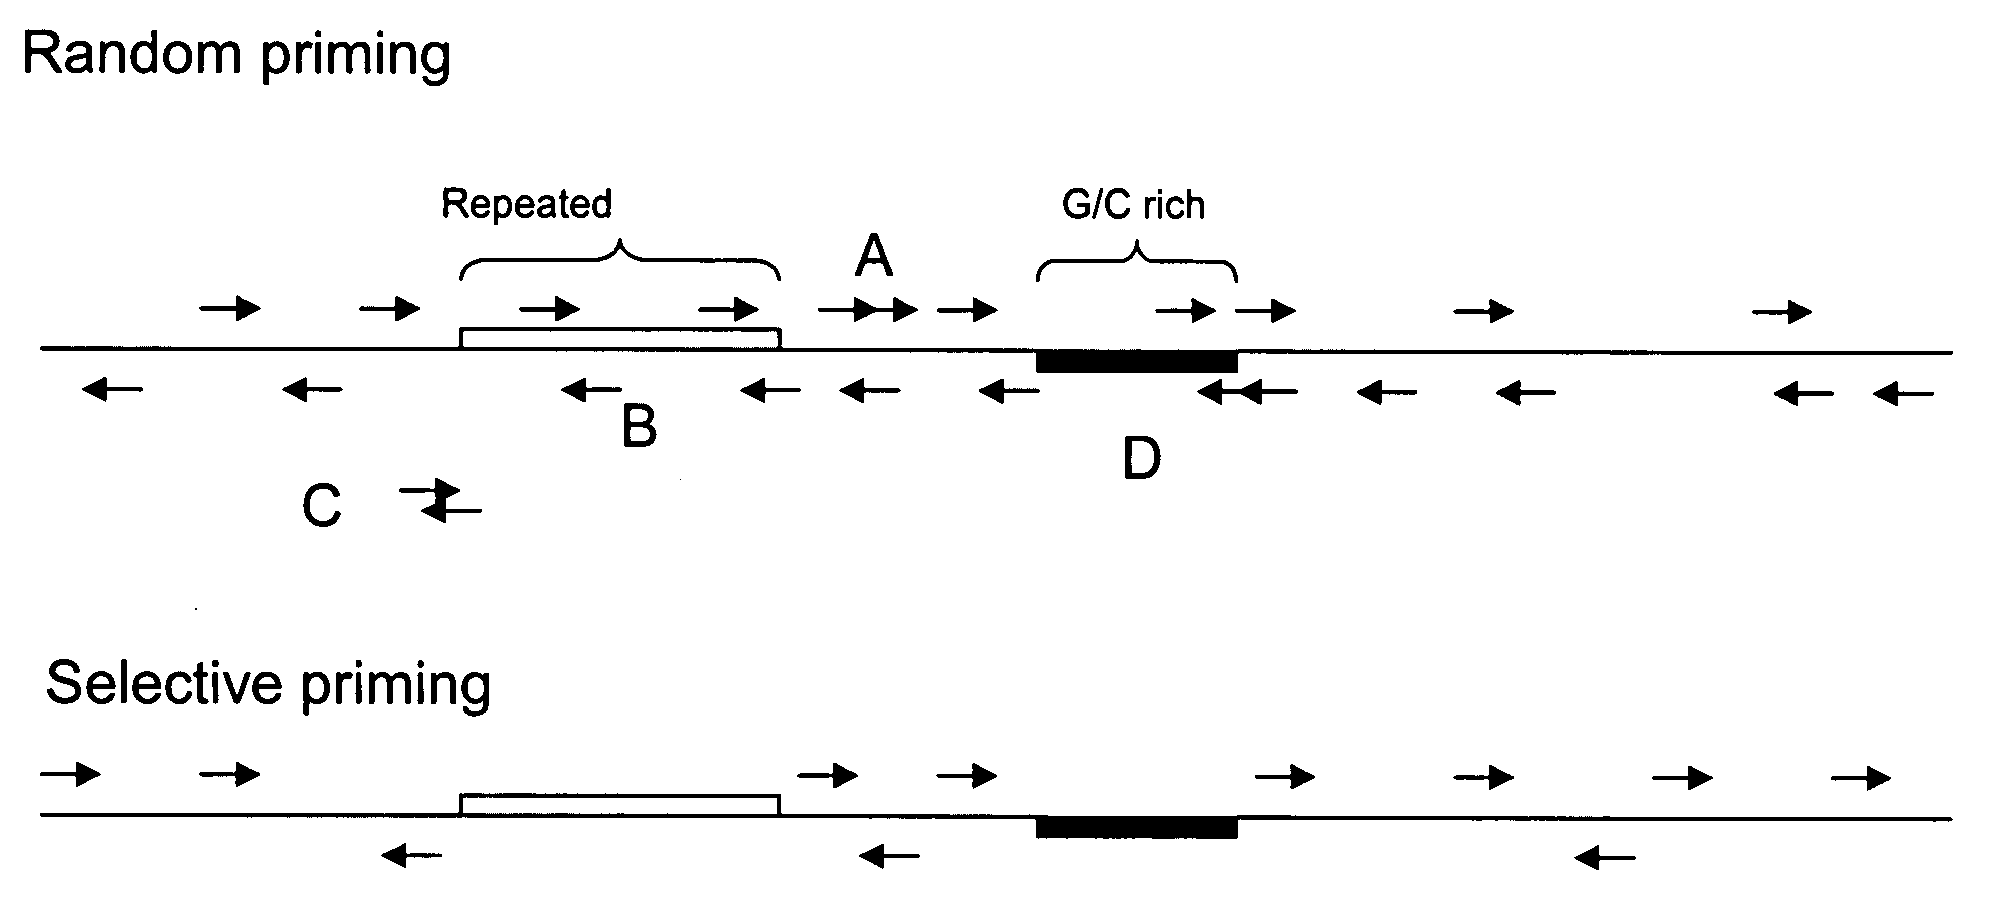 Complex oligonucleotide primer mix